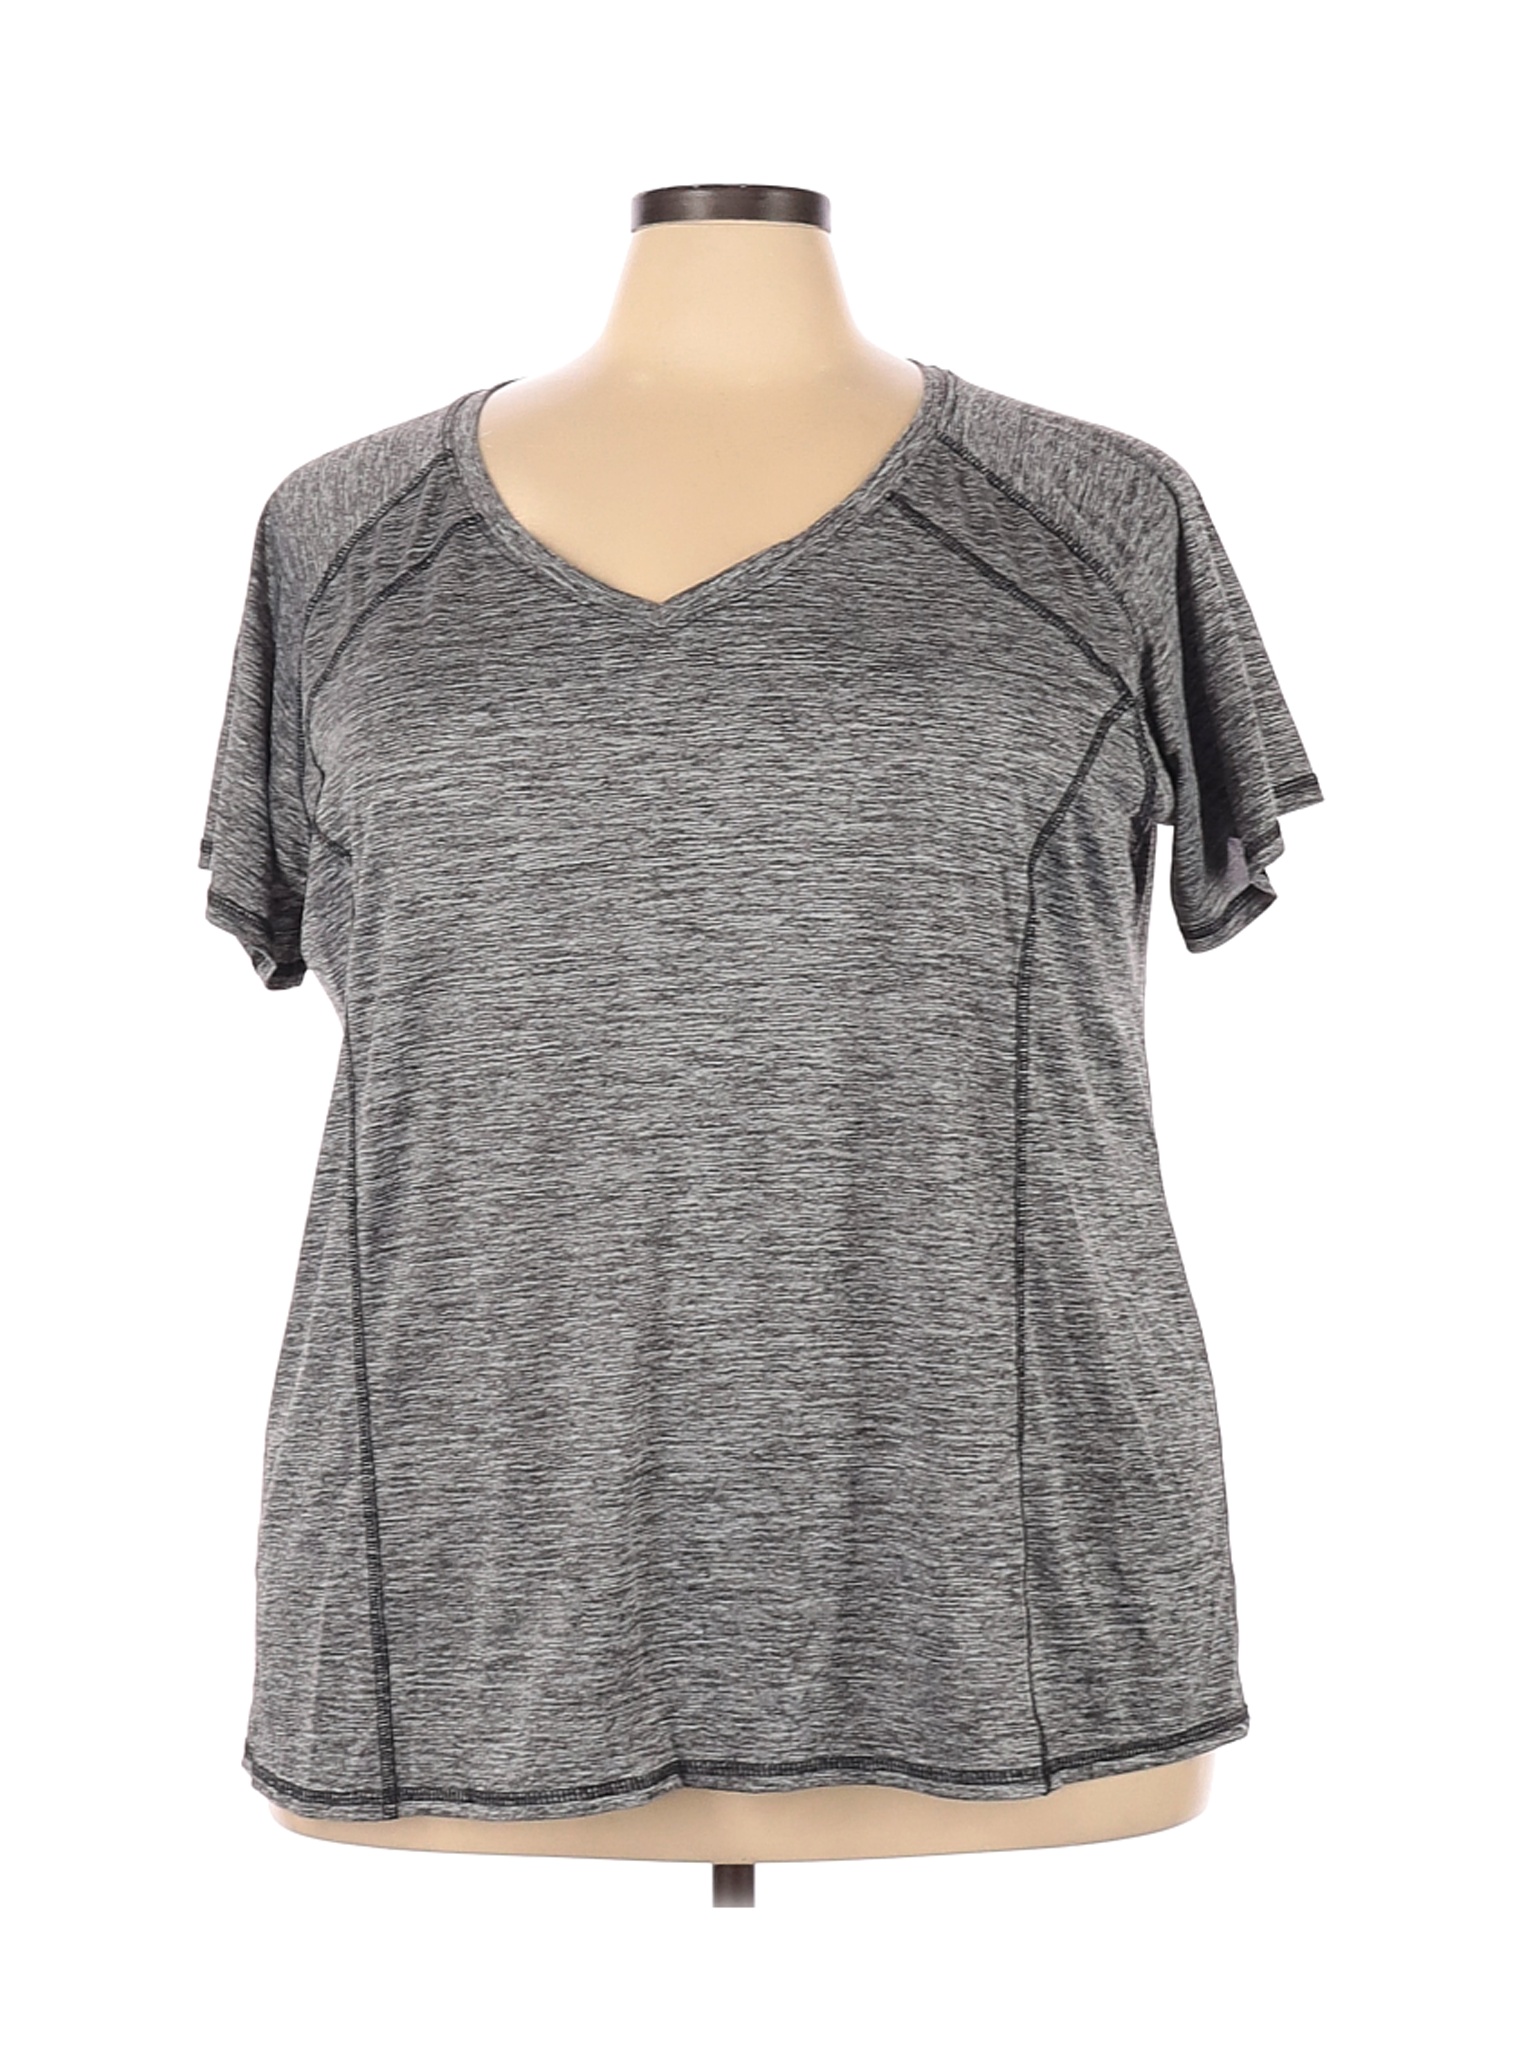 LIVI Active Women Gray Short Sleeve T-Shirt 26 Plus | eBay